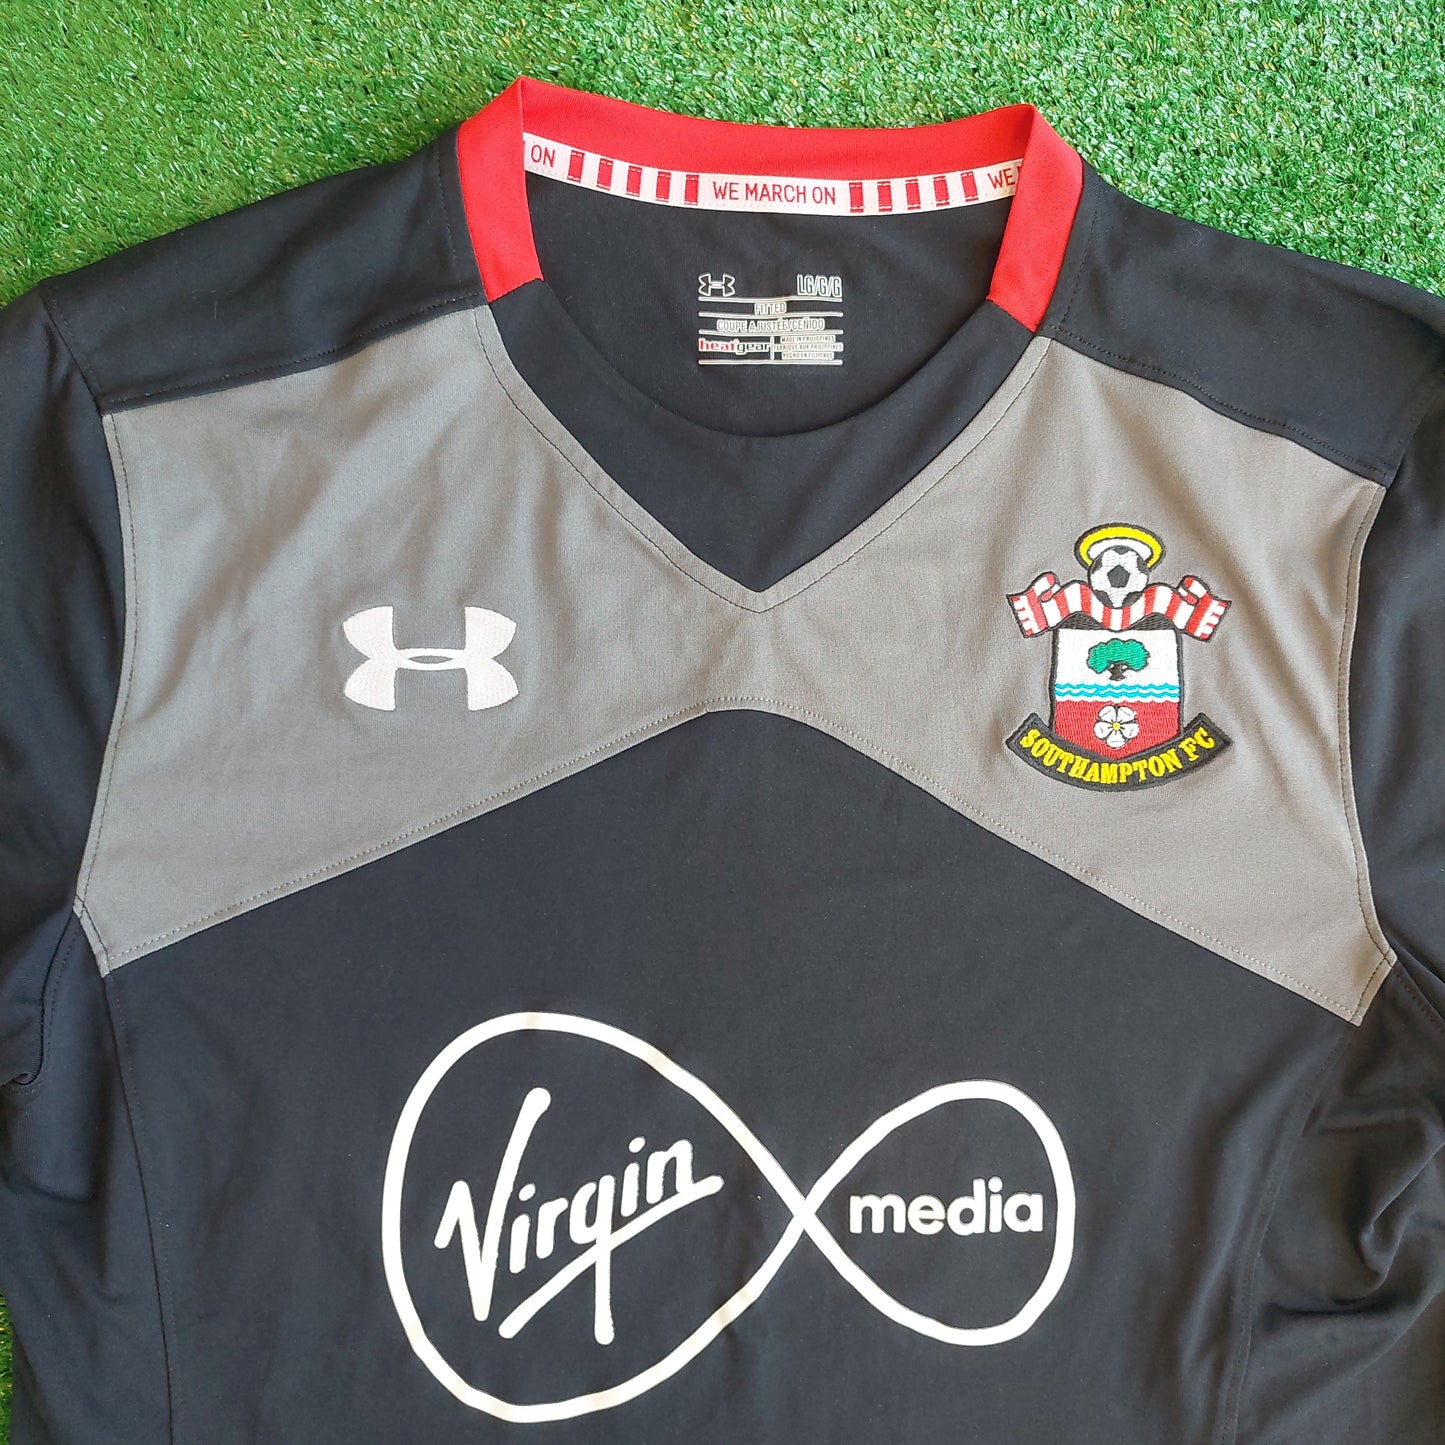 Southampton FC 2016/17 Away Shirt (Excellent) - Size L